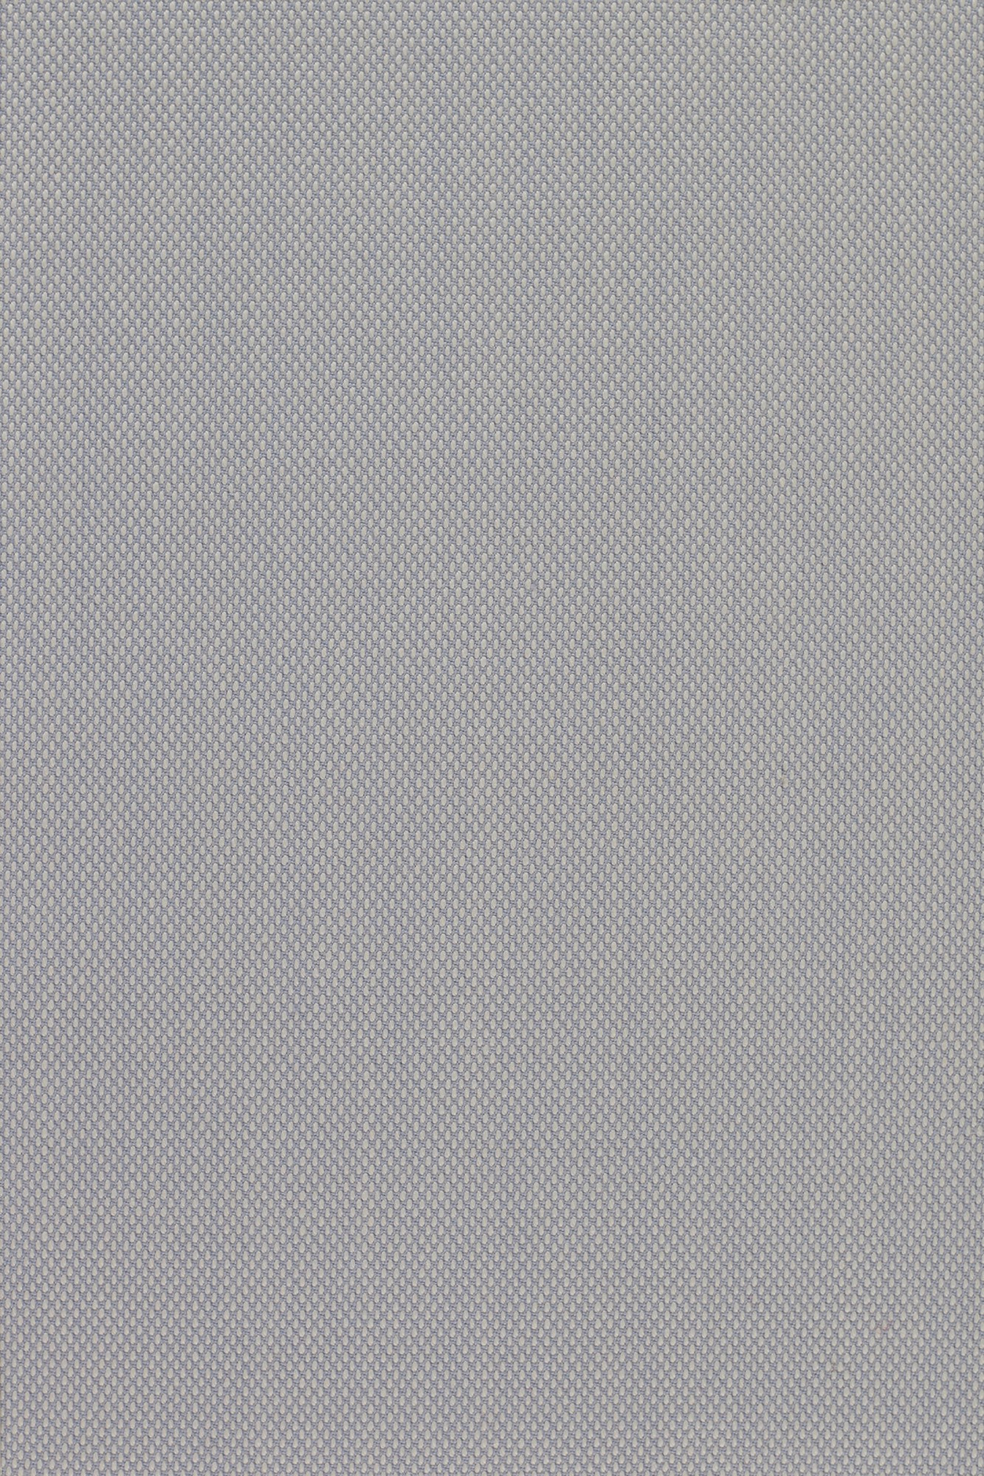 Fabric sample Steelcut Trio 3 105 grey